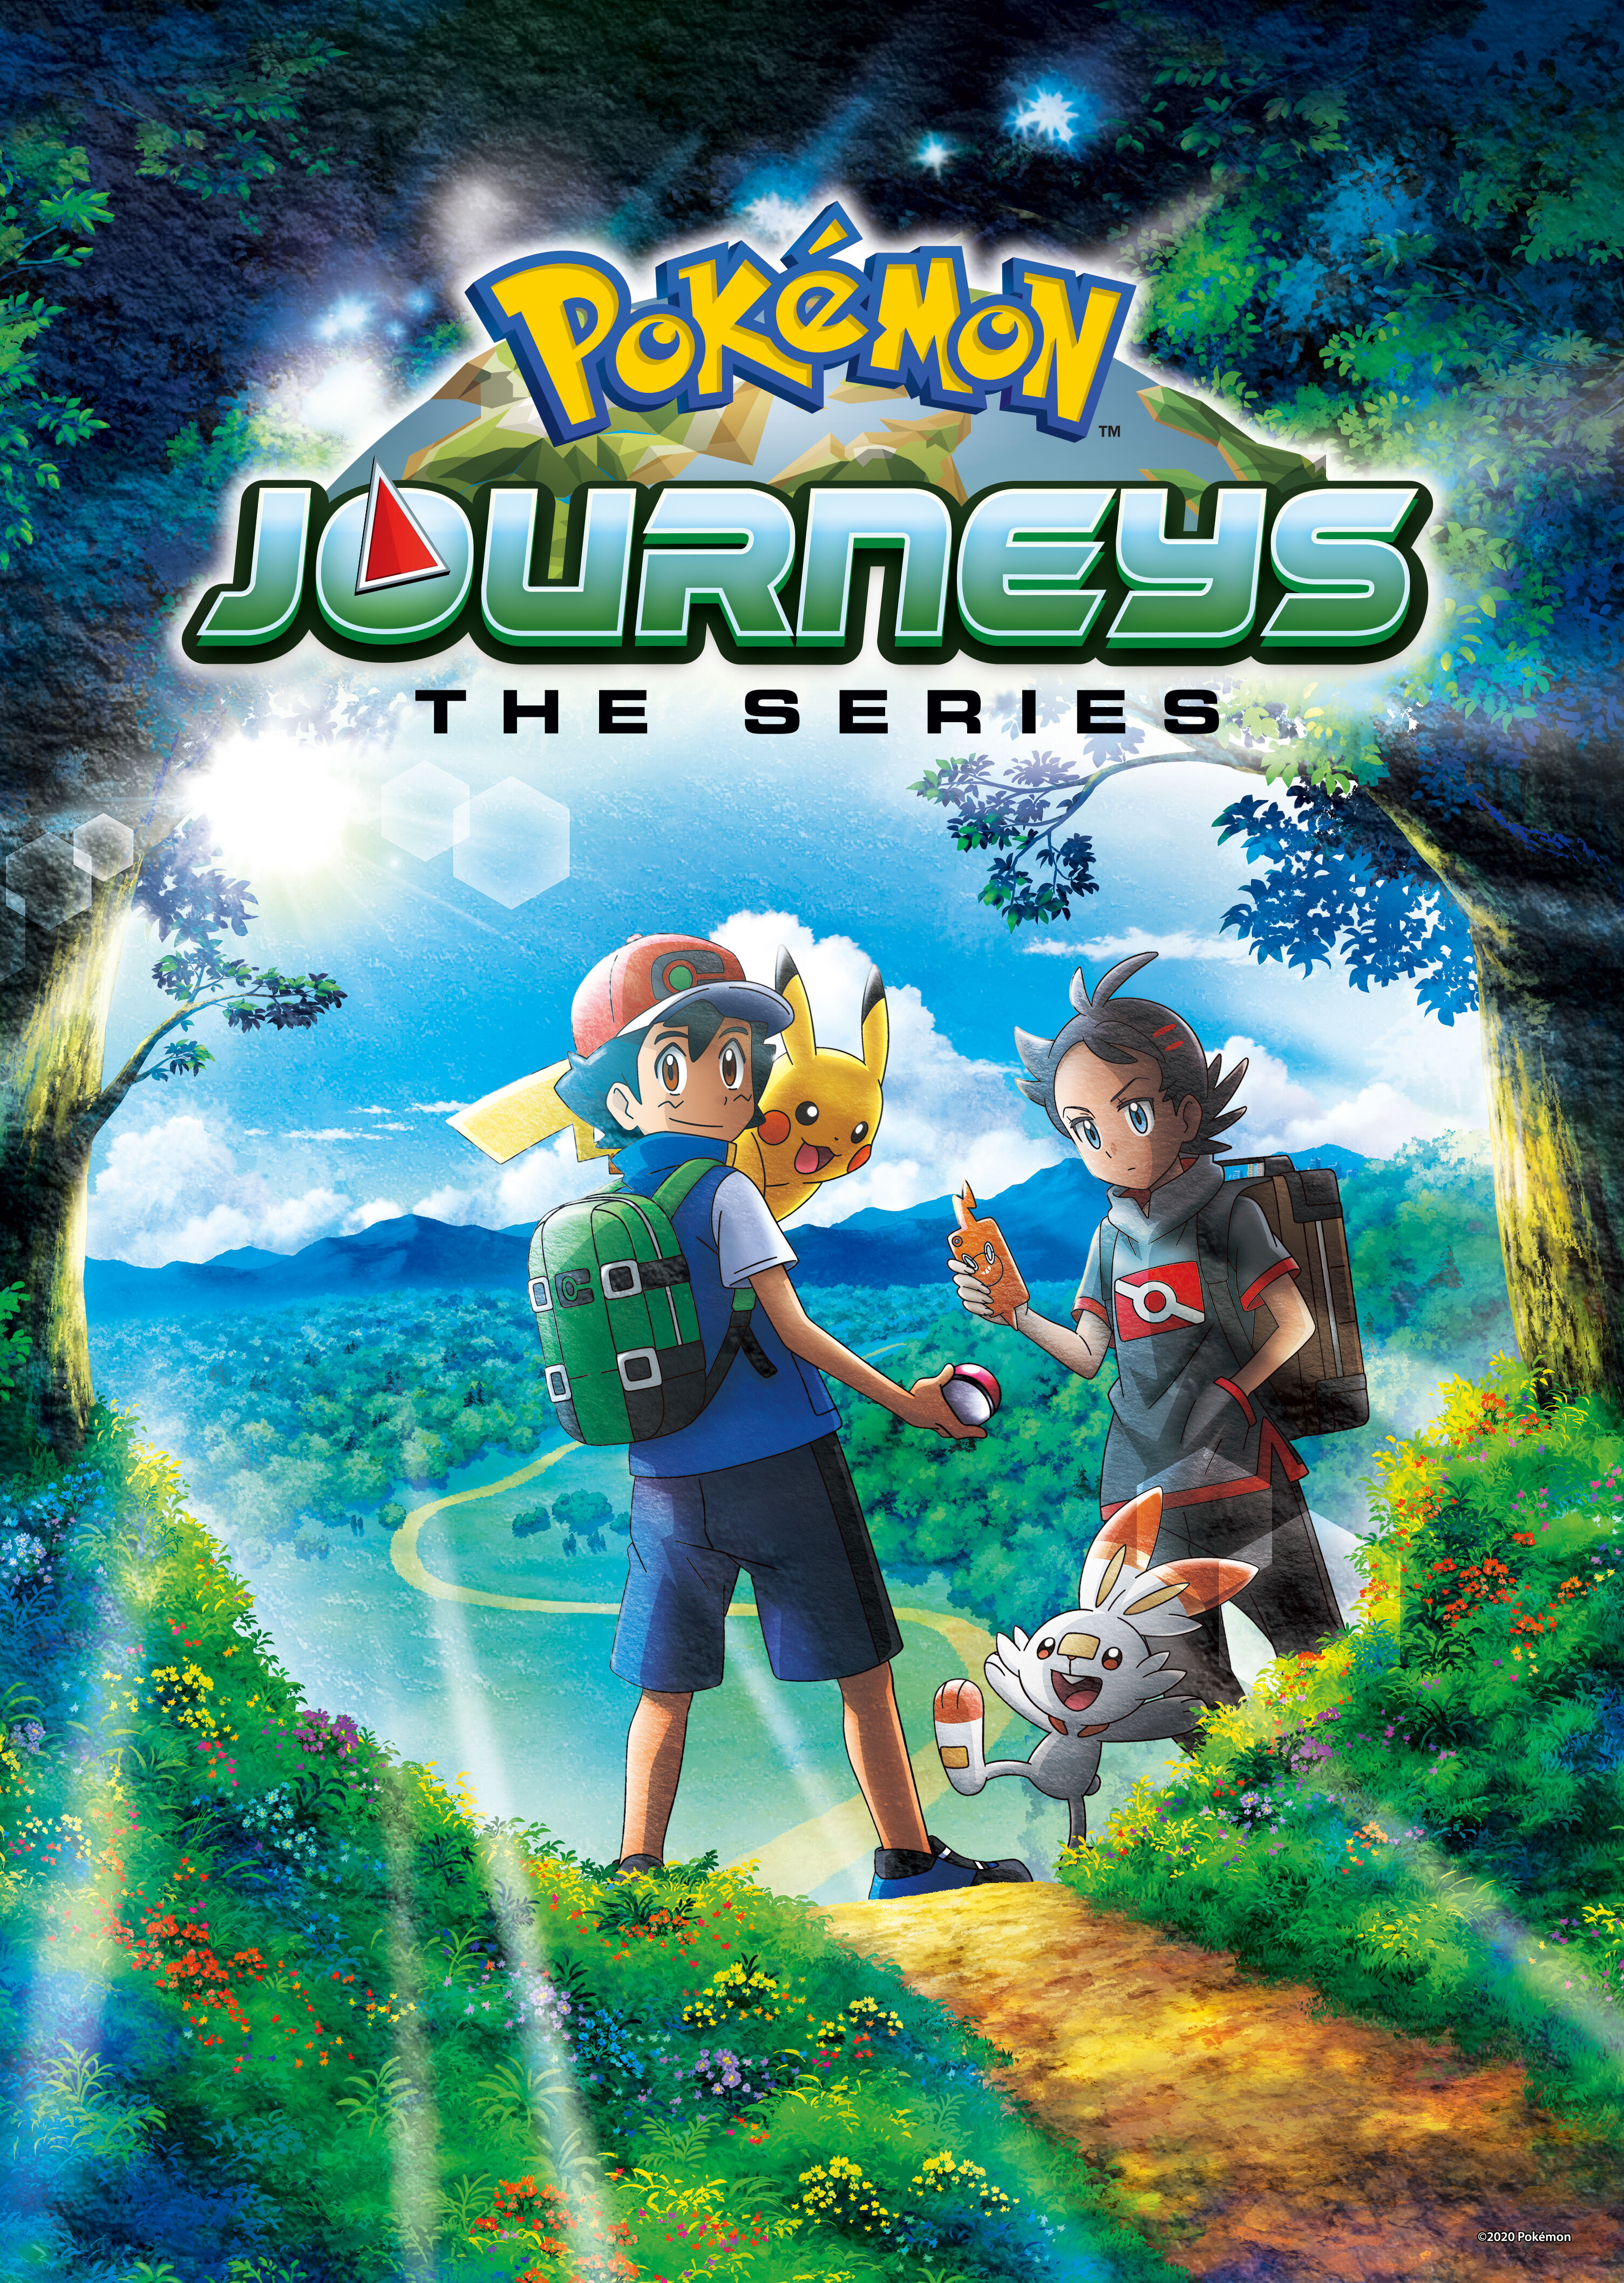 Pokemon: Journey of Dreams Trailer: 'Pokemon: Journey of Dreams' trailer  out; Here's what to know about the anime - The Economic Times